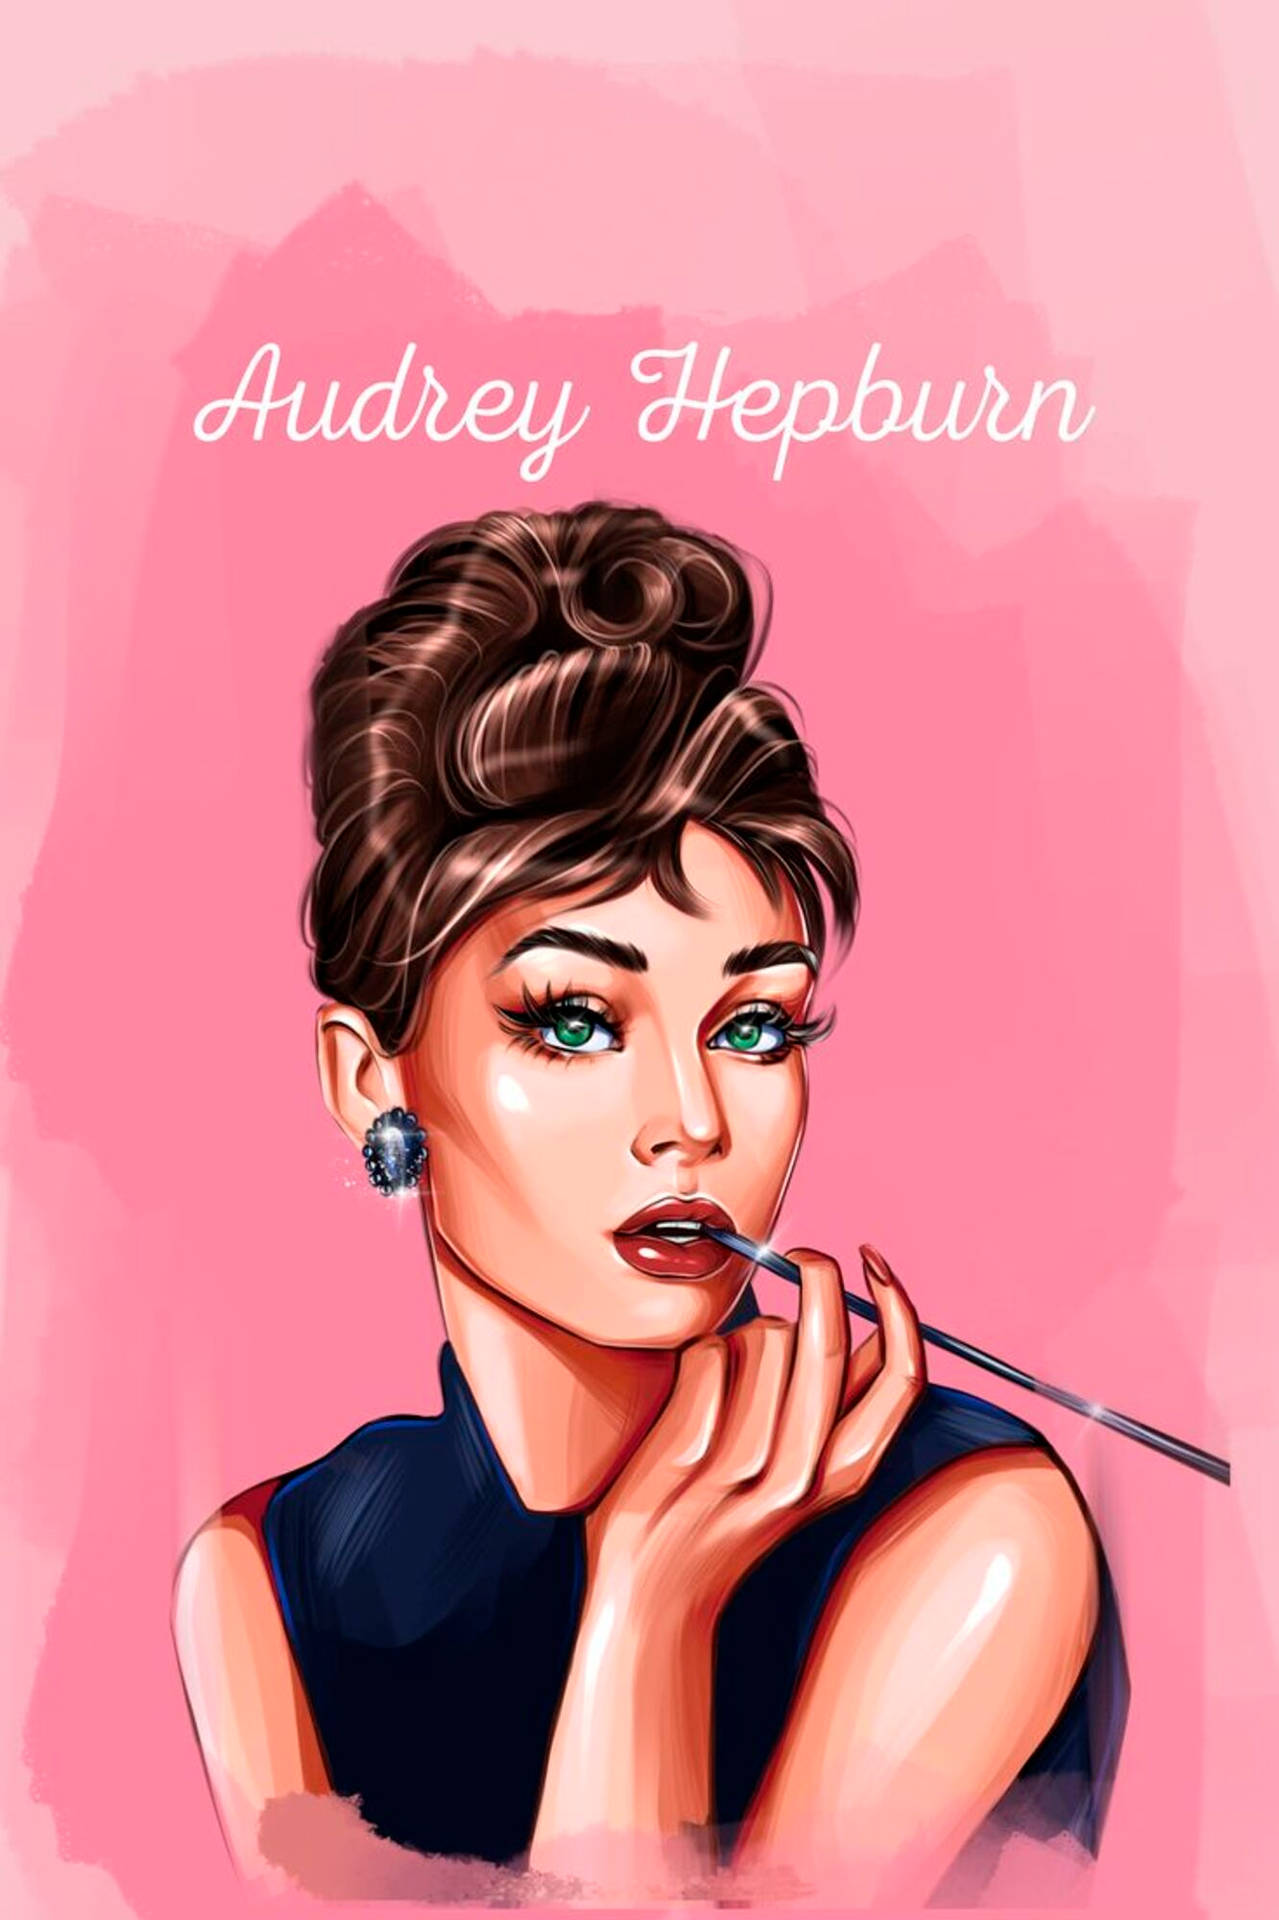 Immagini Di Audrey Hepburn